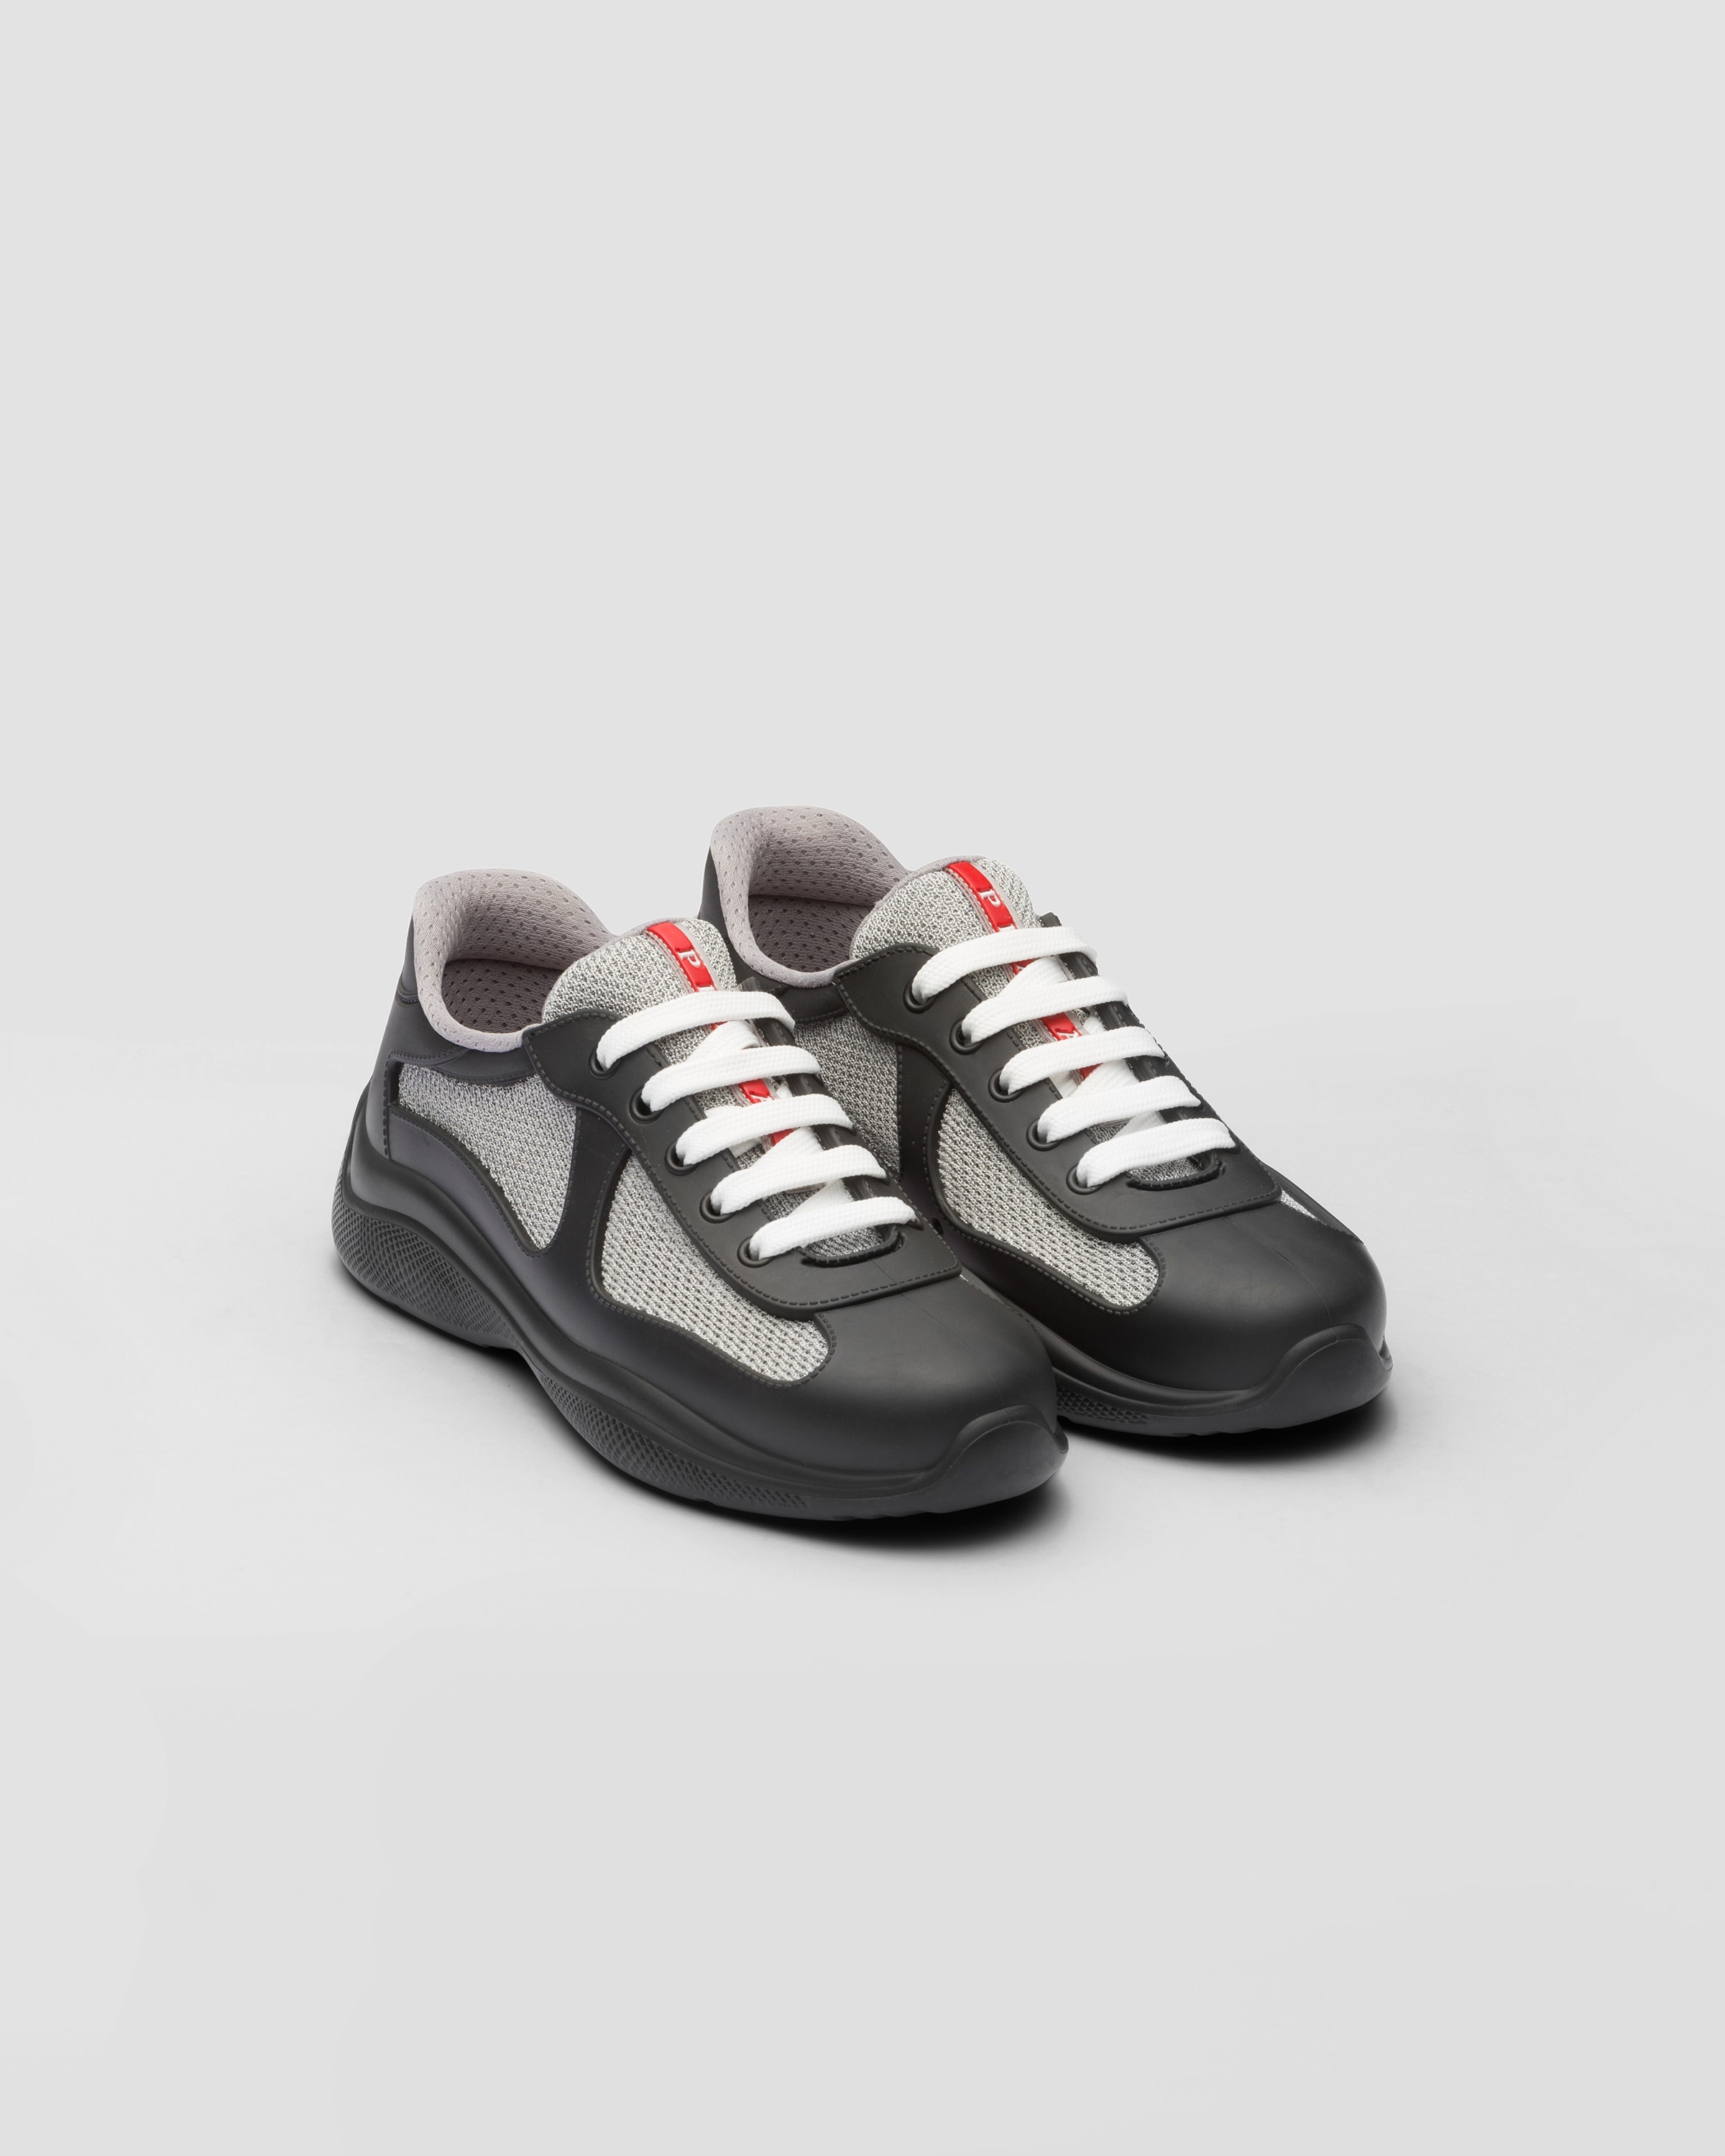 Prada America's Cup Soft rubber and bike fabric sneakers - 1